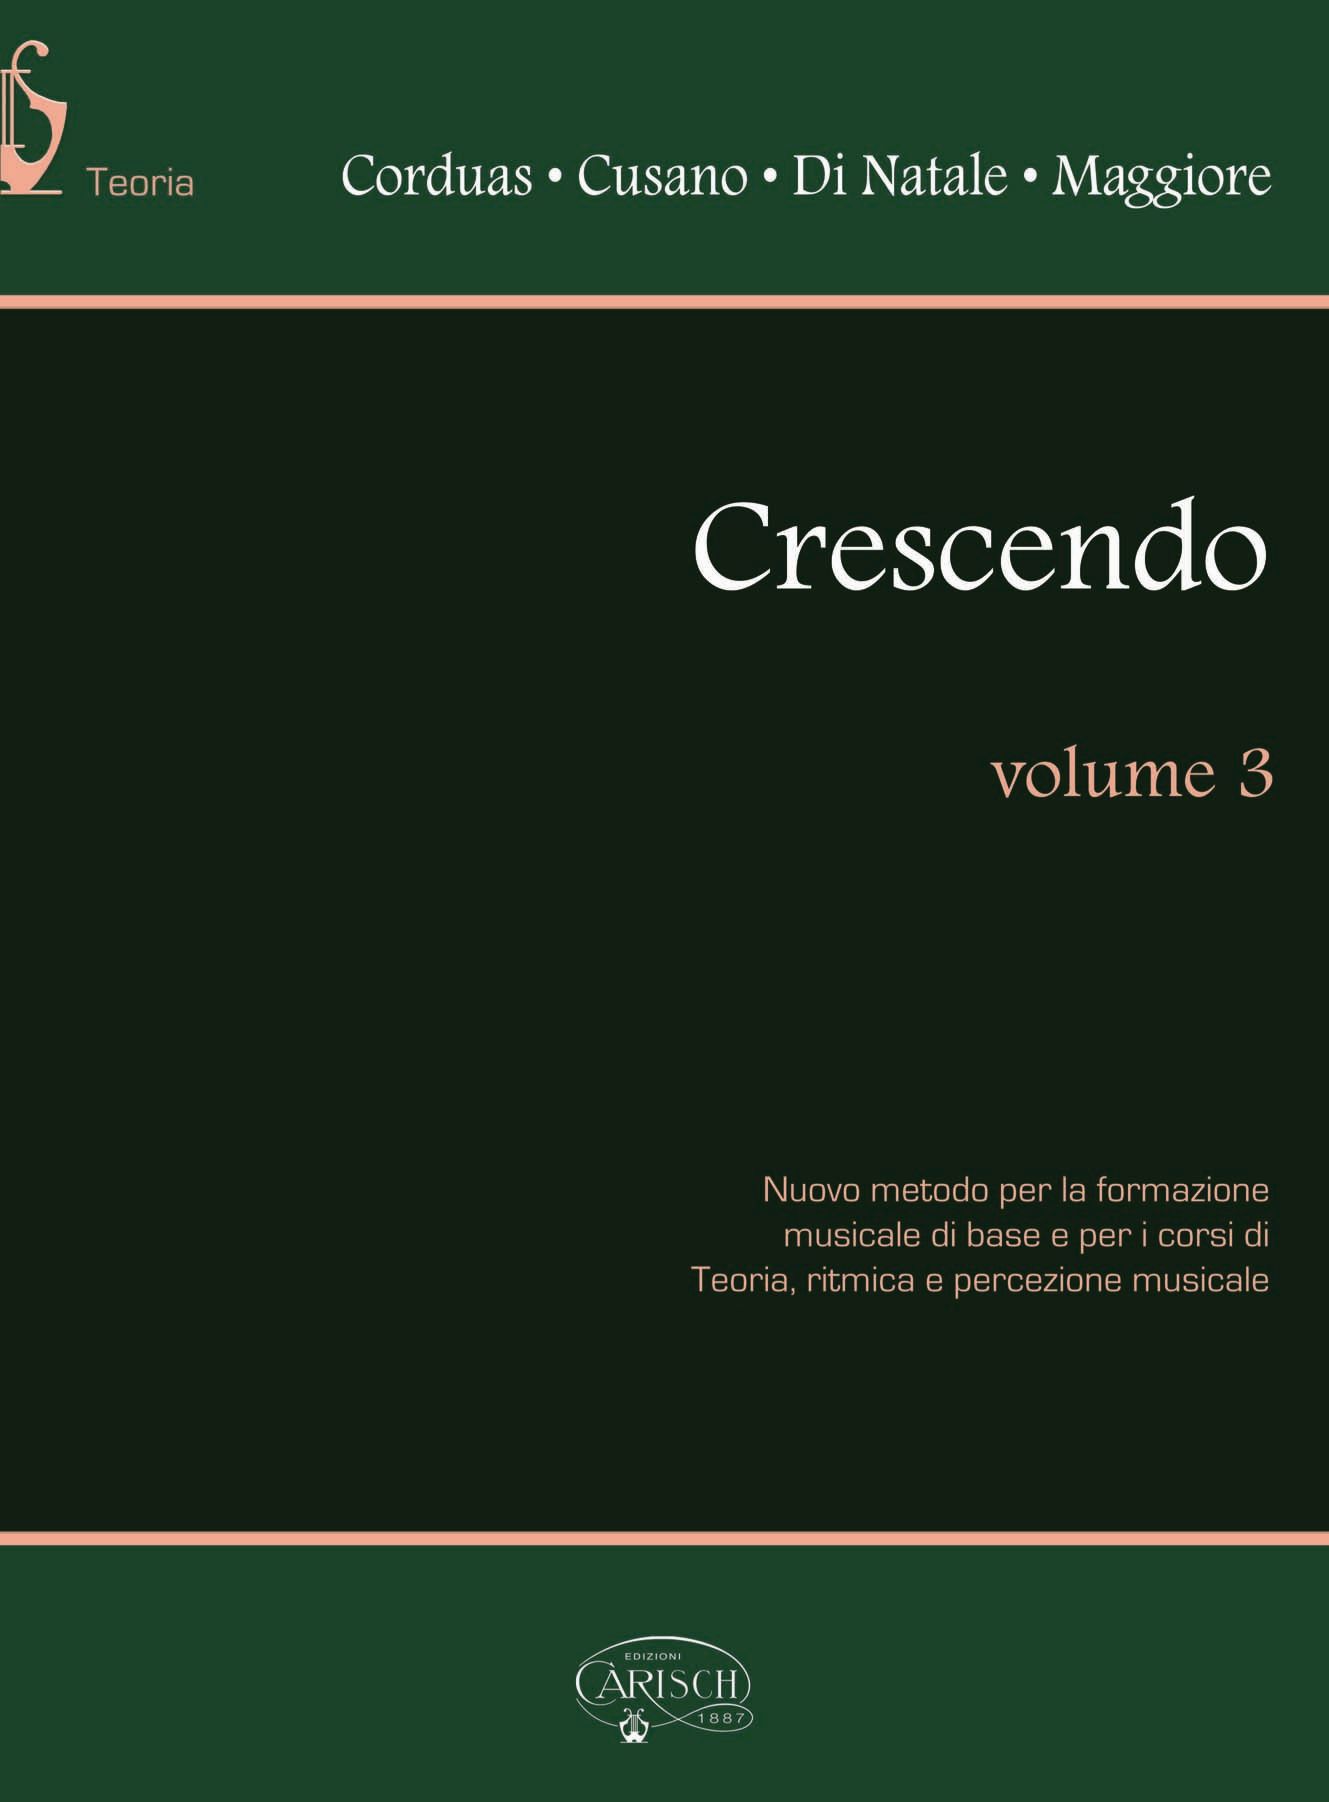 Anna Maria Corduas: Crescendo. Volume 3: Theory